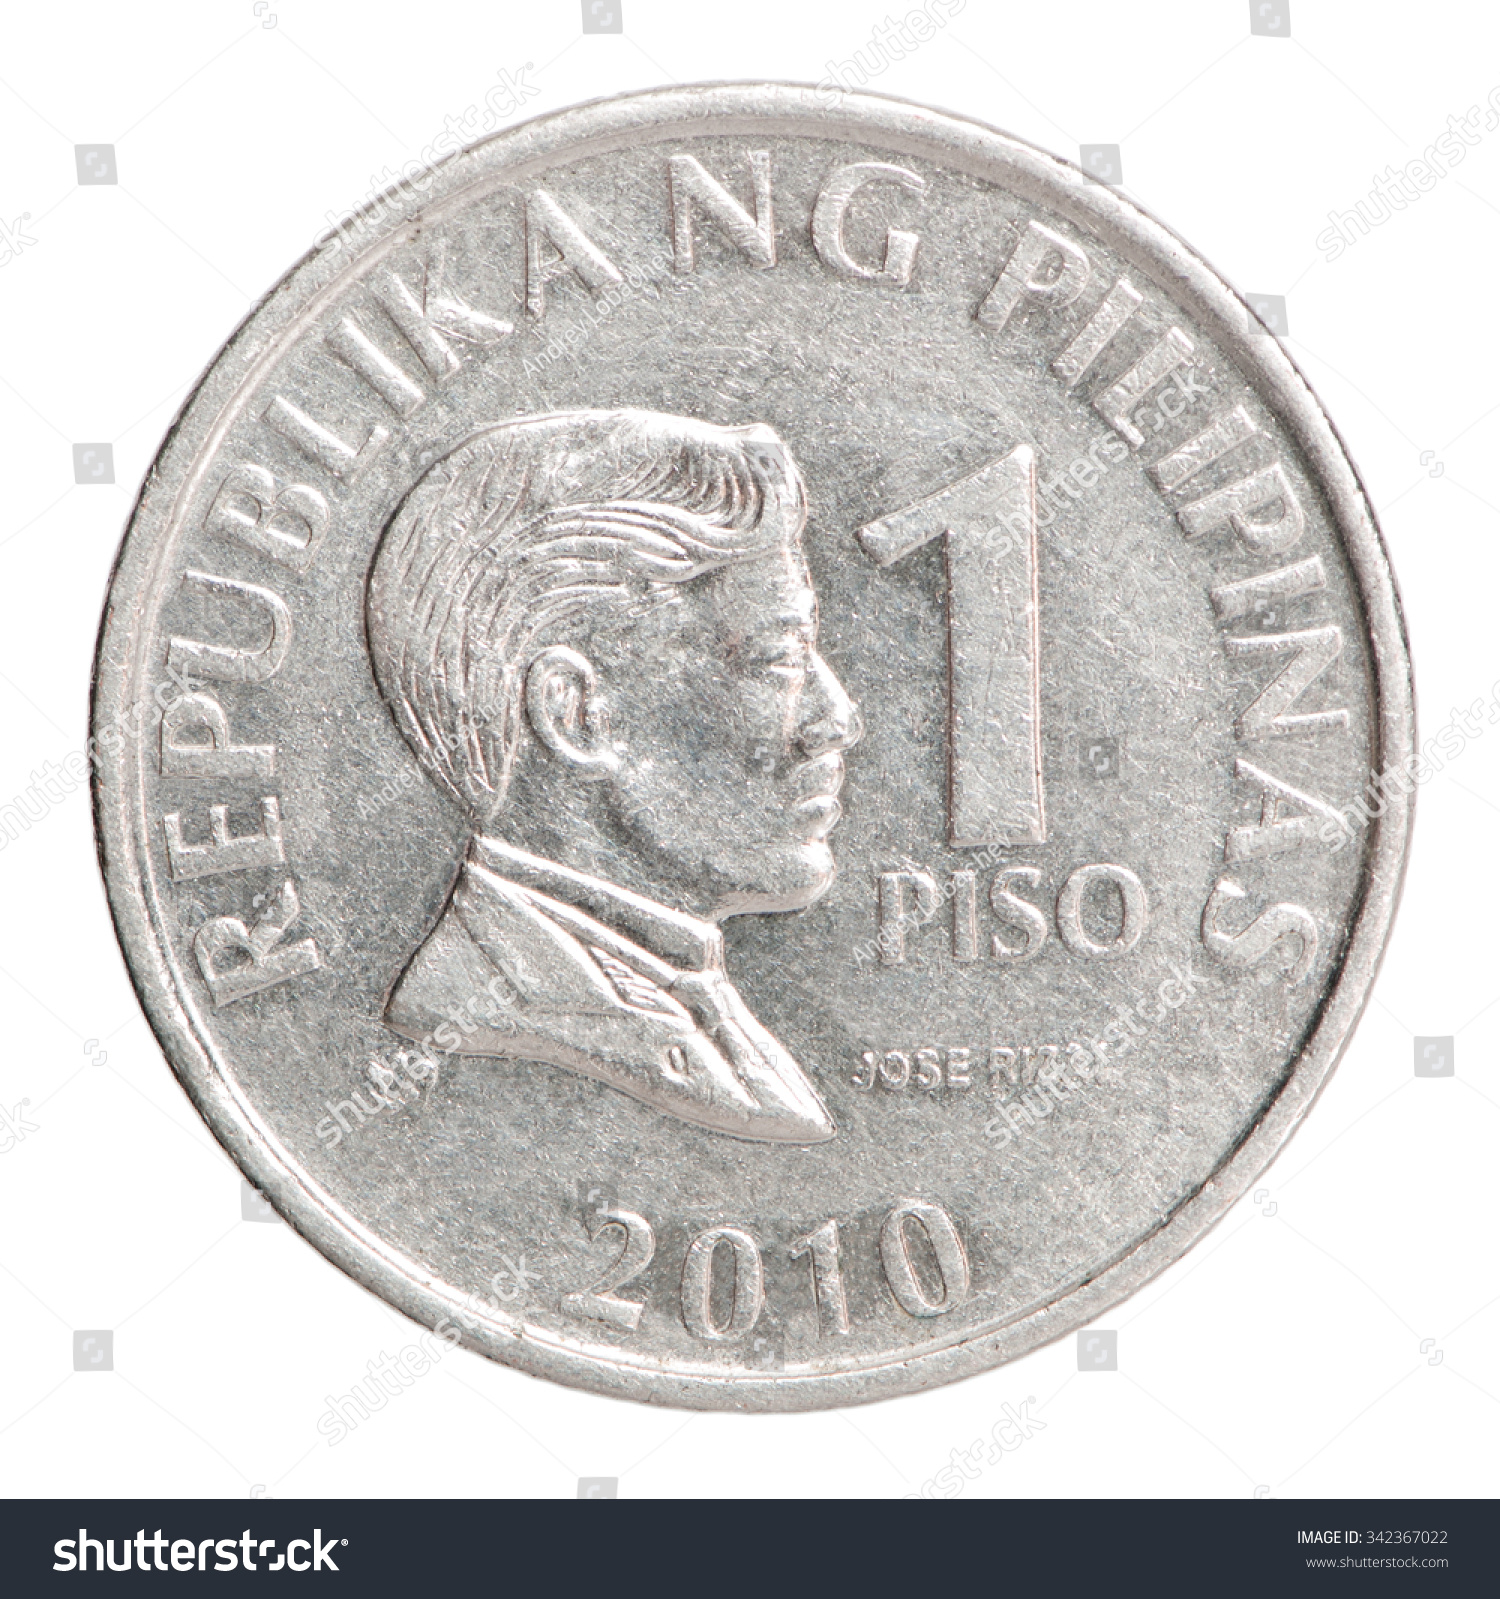 philippine money clipart - photo #5